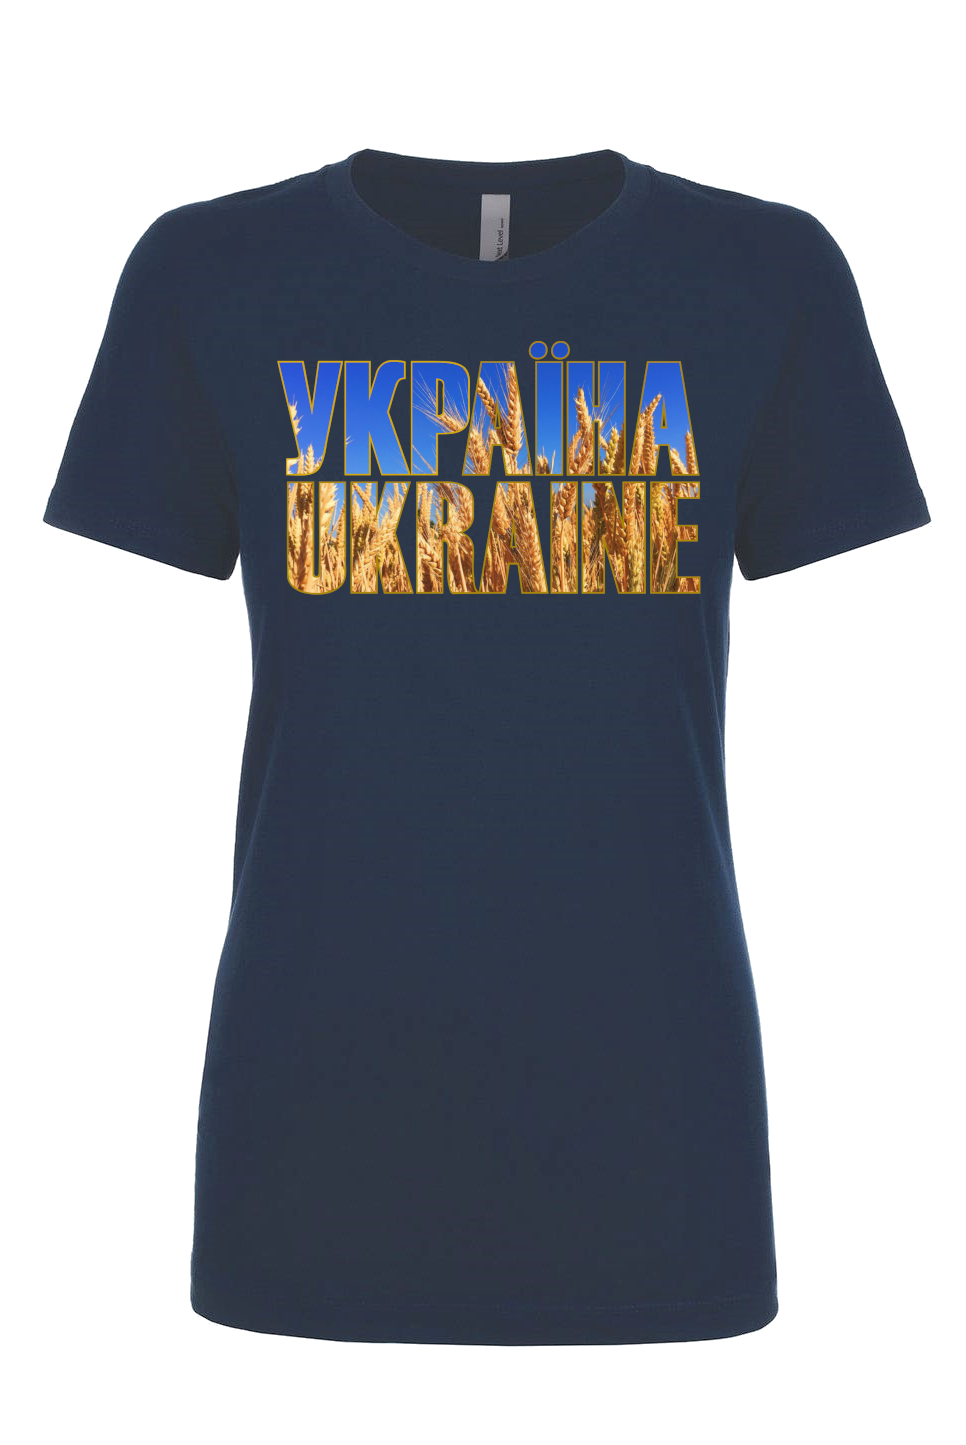 Female fit t-shirt "УКРАЇНА UKRAINE"